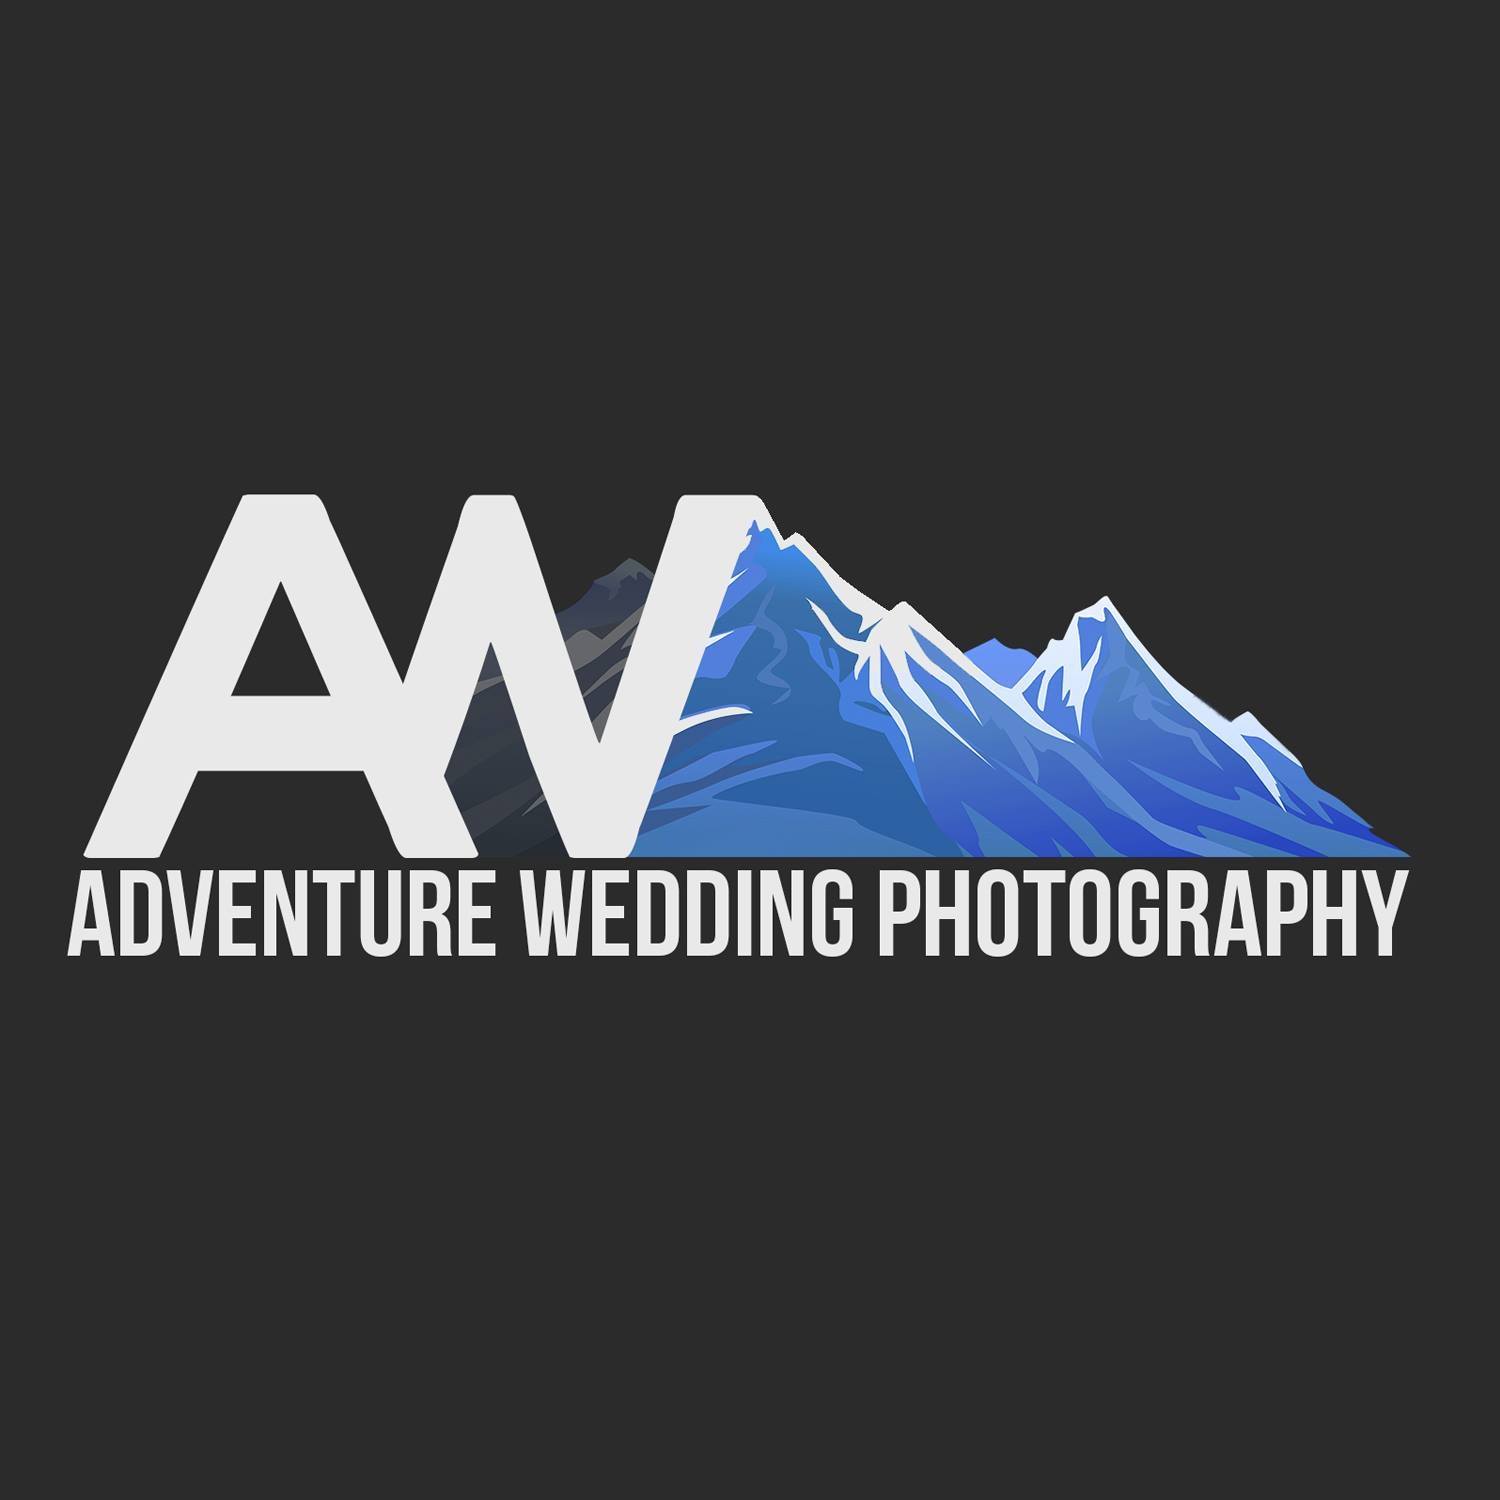 Company logo of Adventure Wedding Photography